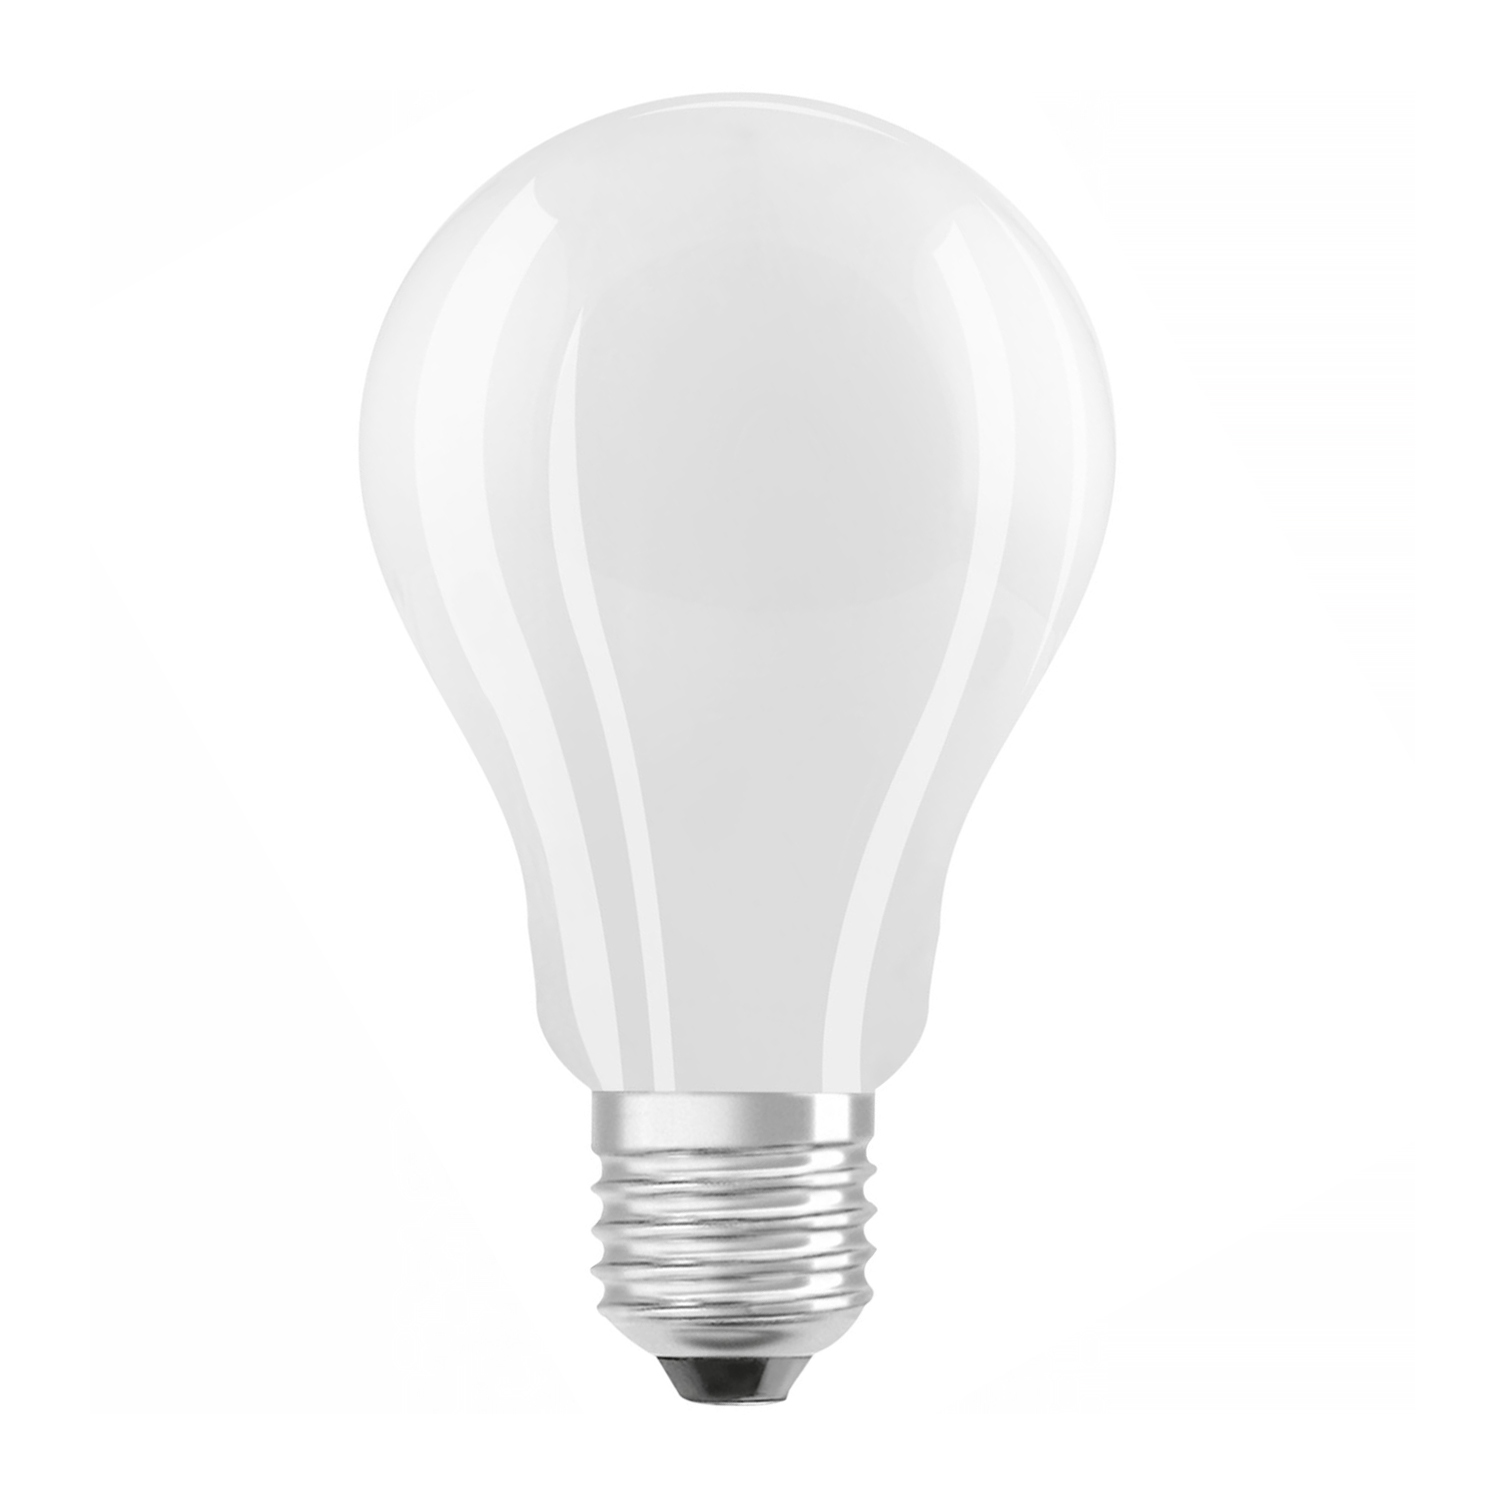 Osram Ledvance LED Parathom Retrofit Classic E27 A70 15W 840 Frosted | Cool White - Replaces 150W